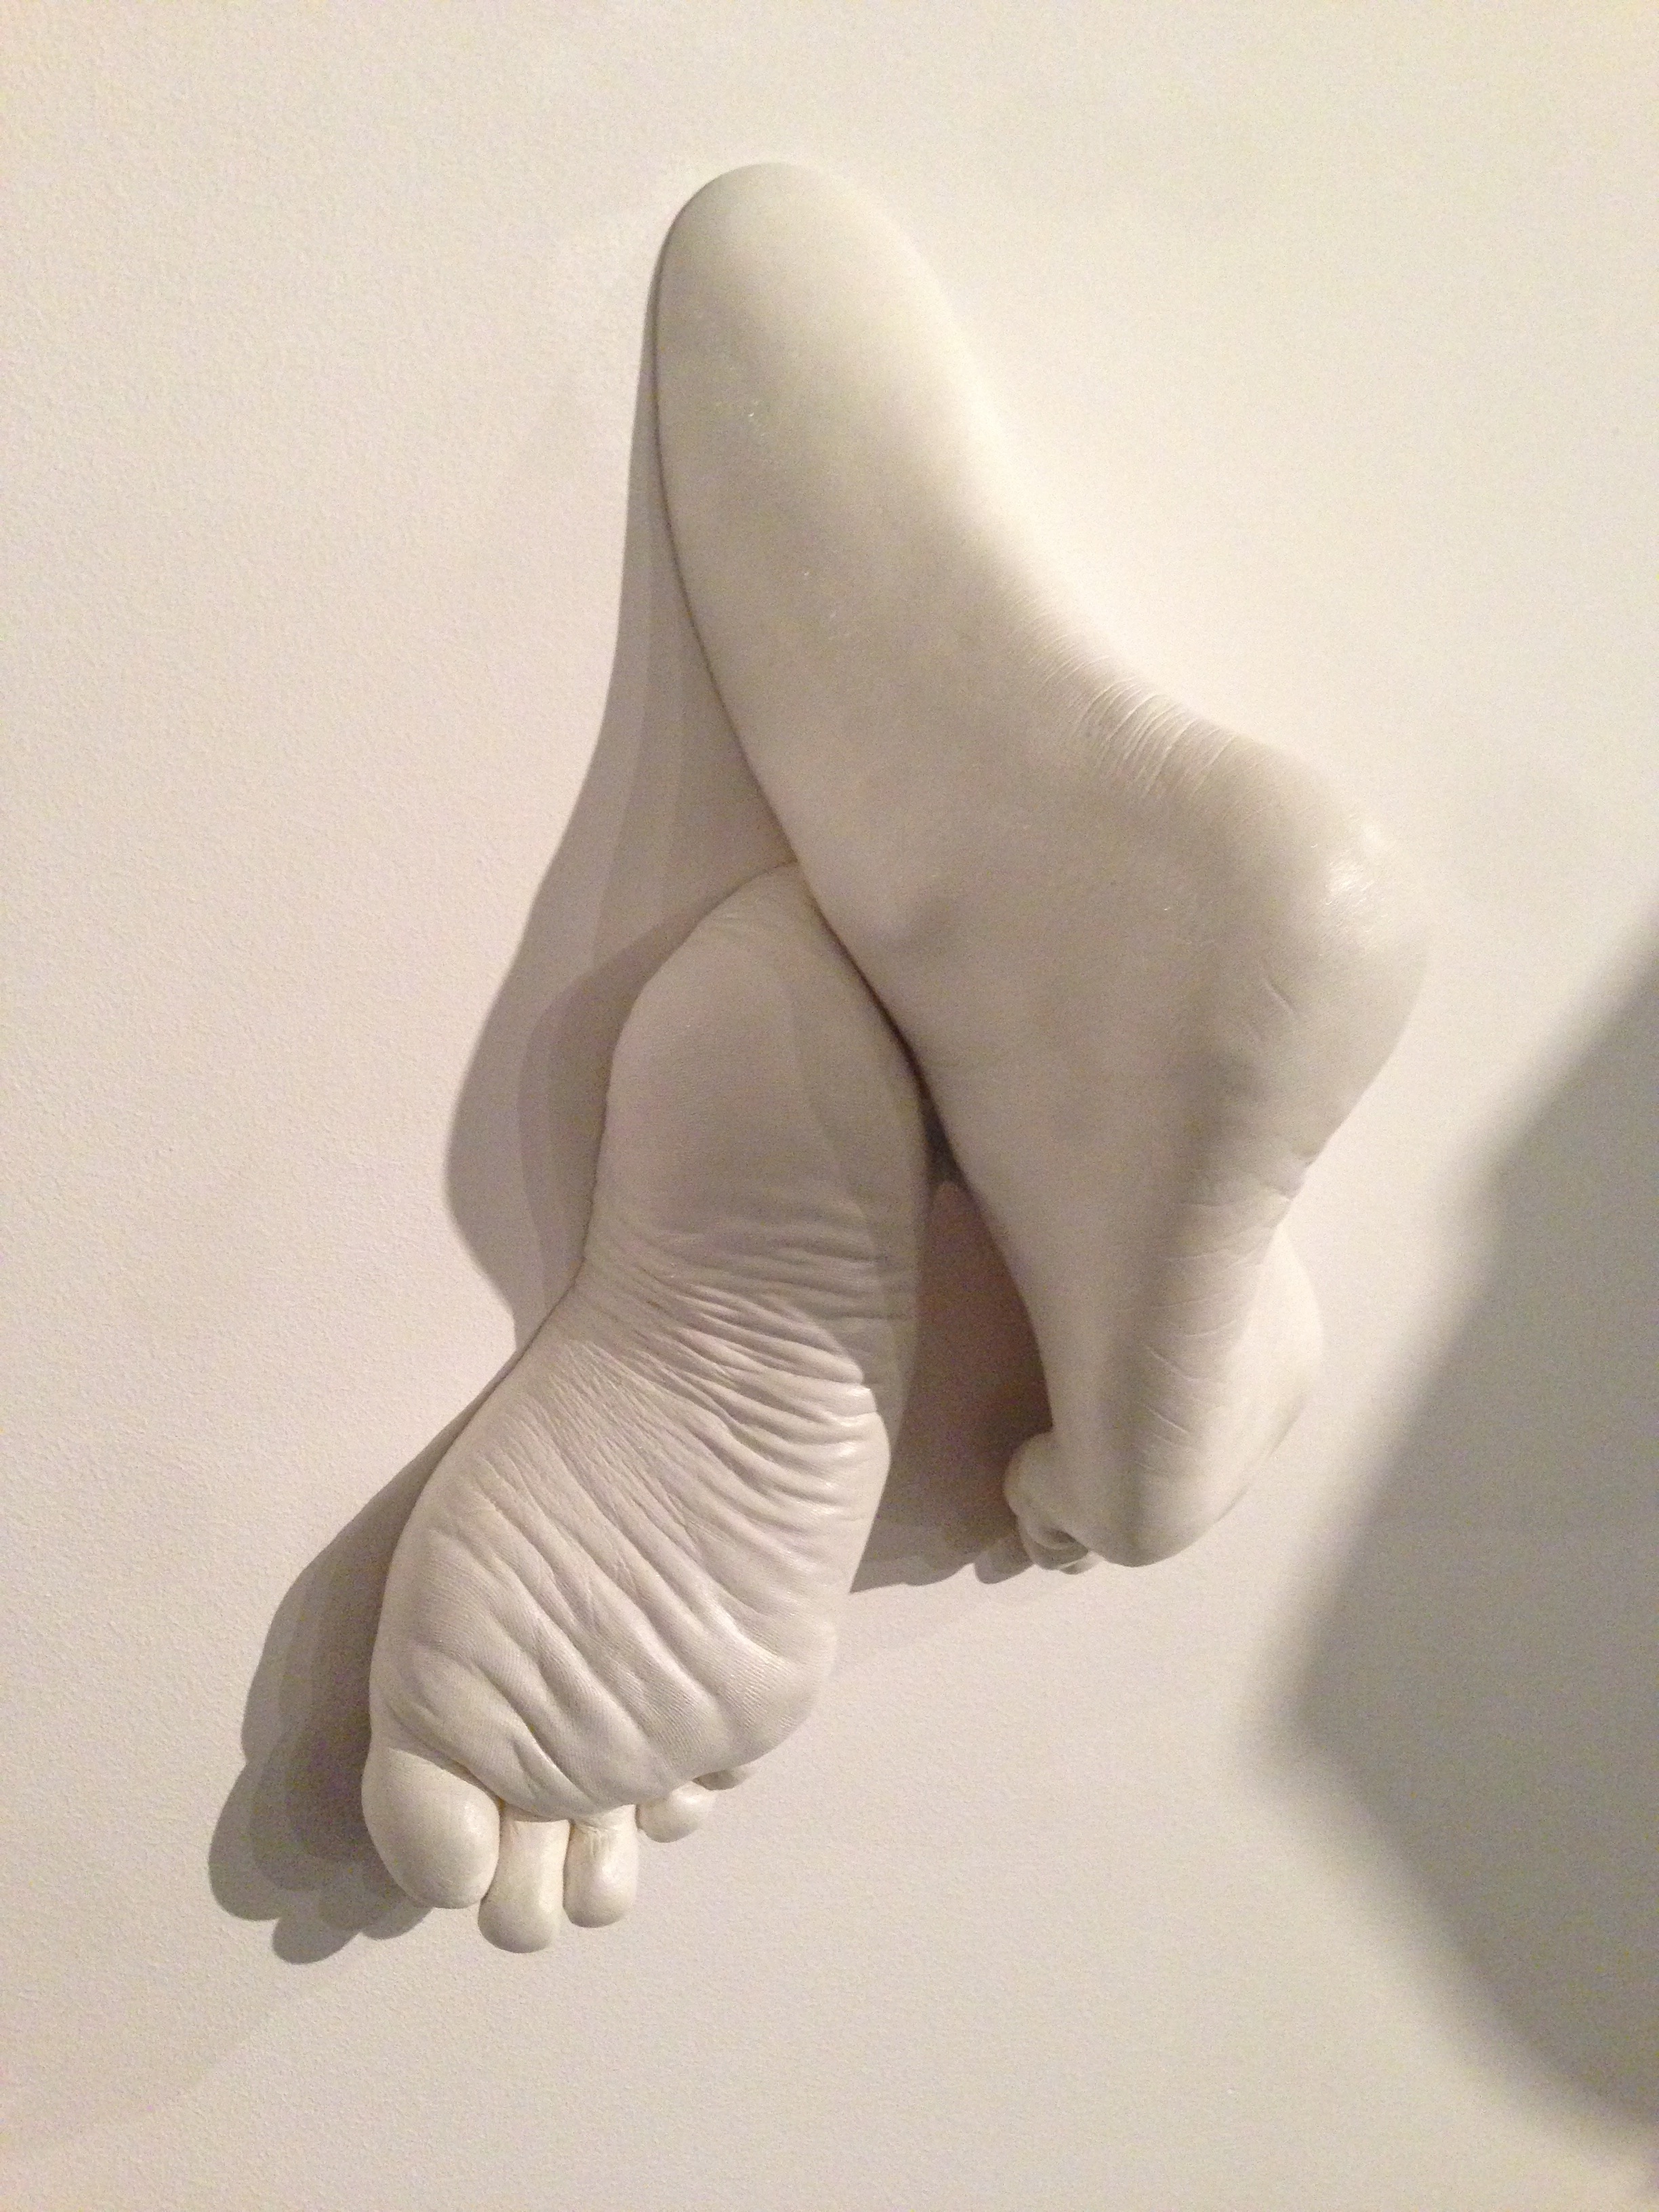 3D Print show – Icarus had a sister – feet detail